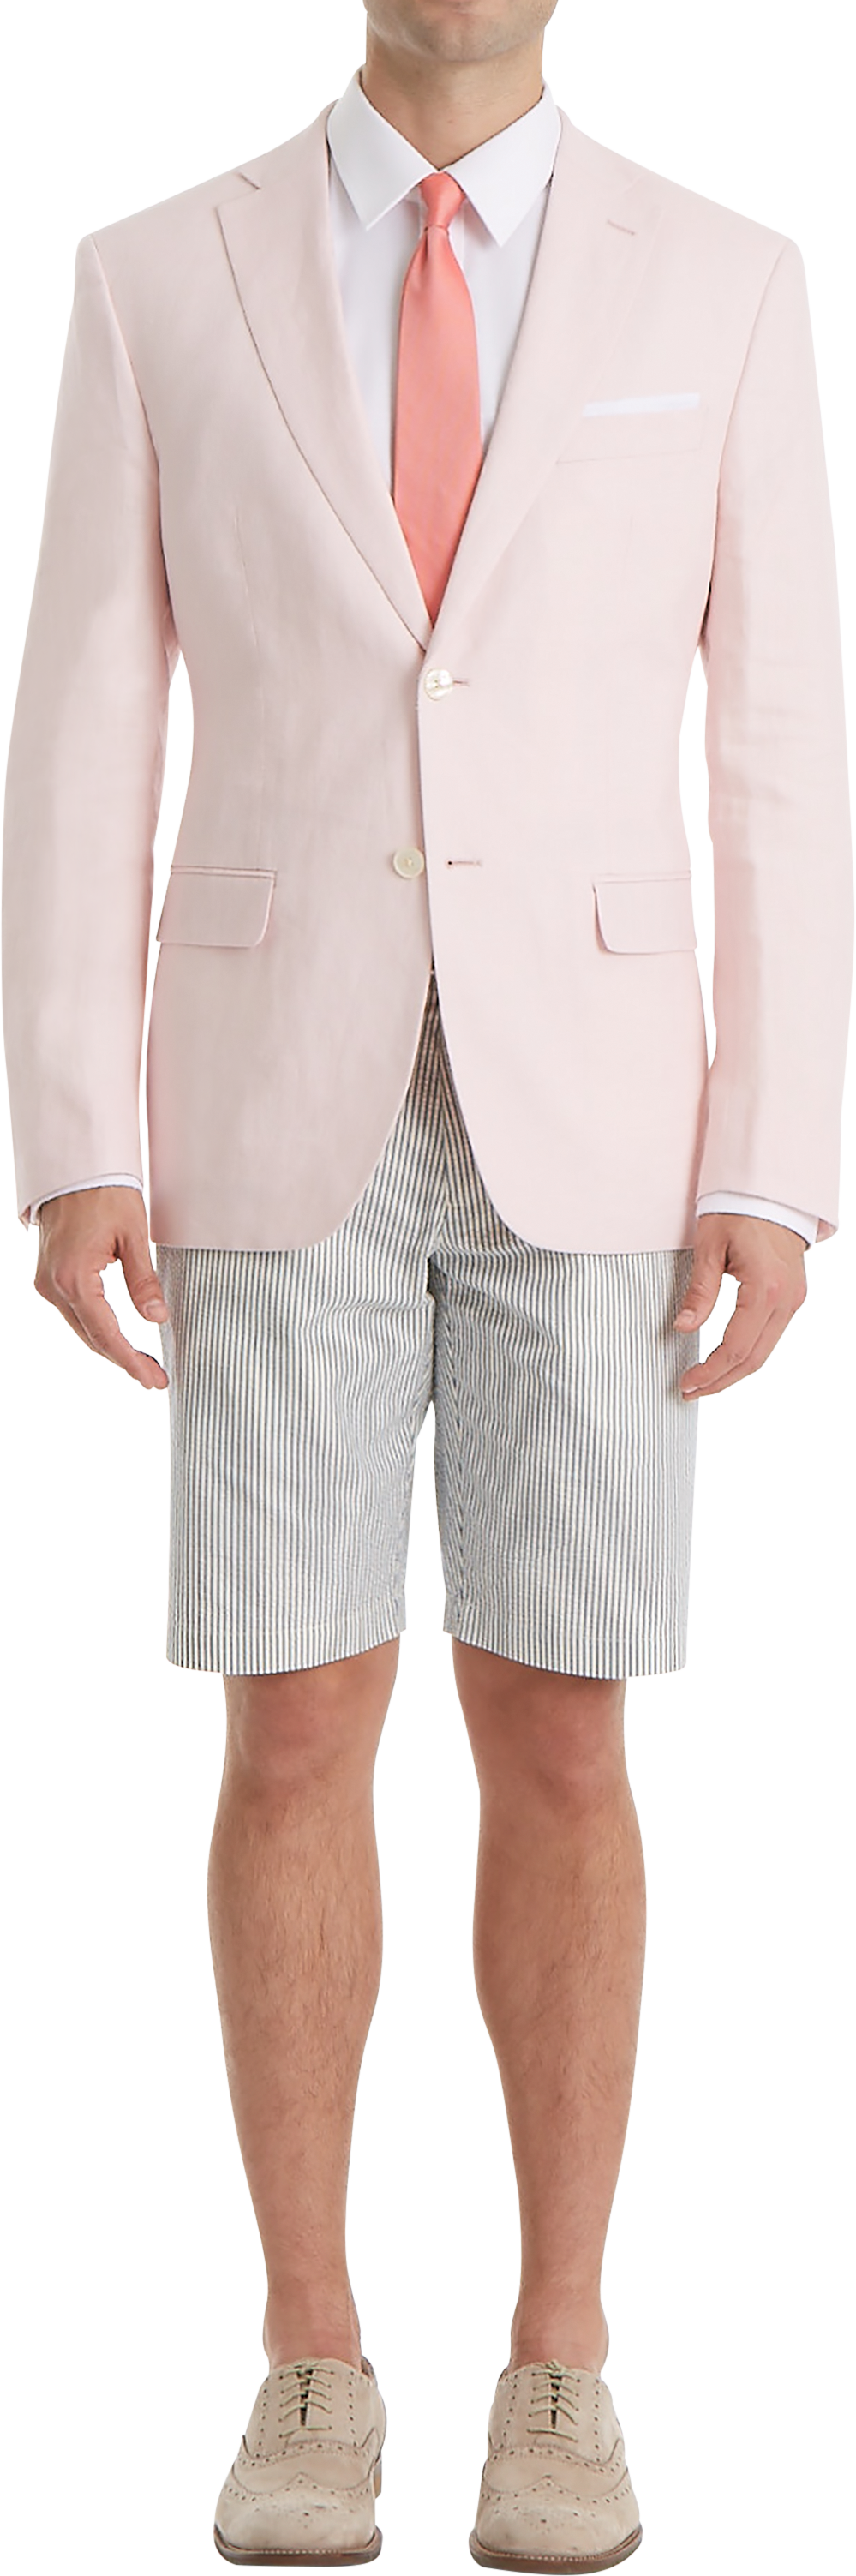 Lauren By Ralph Lauren Classic Fit Linen Suit Separates Coat, Pink - Men's  Suits | Men's Wearhouse